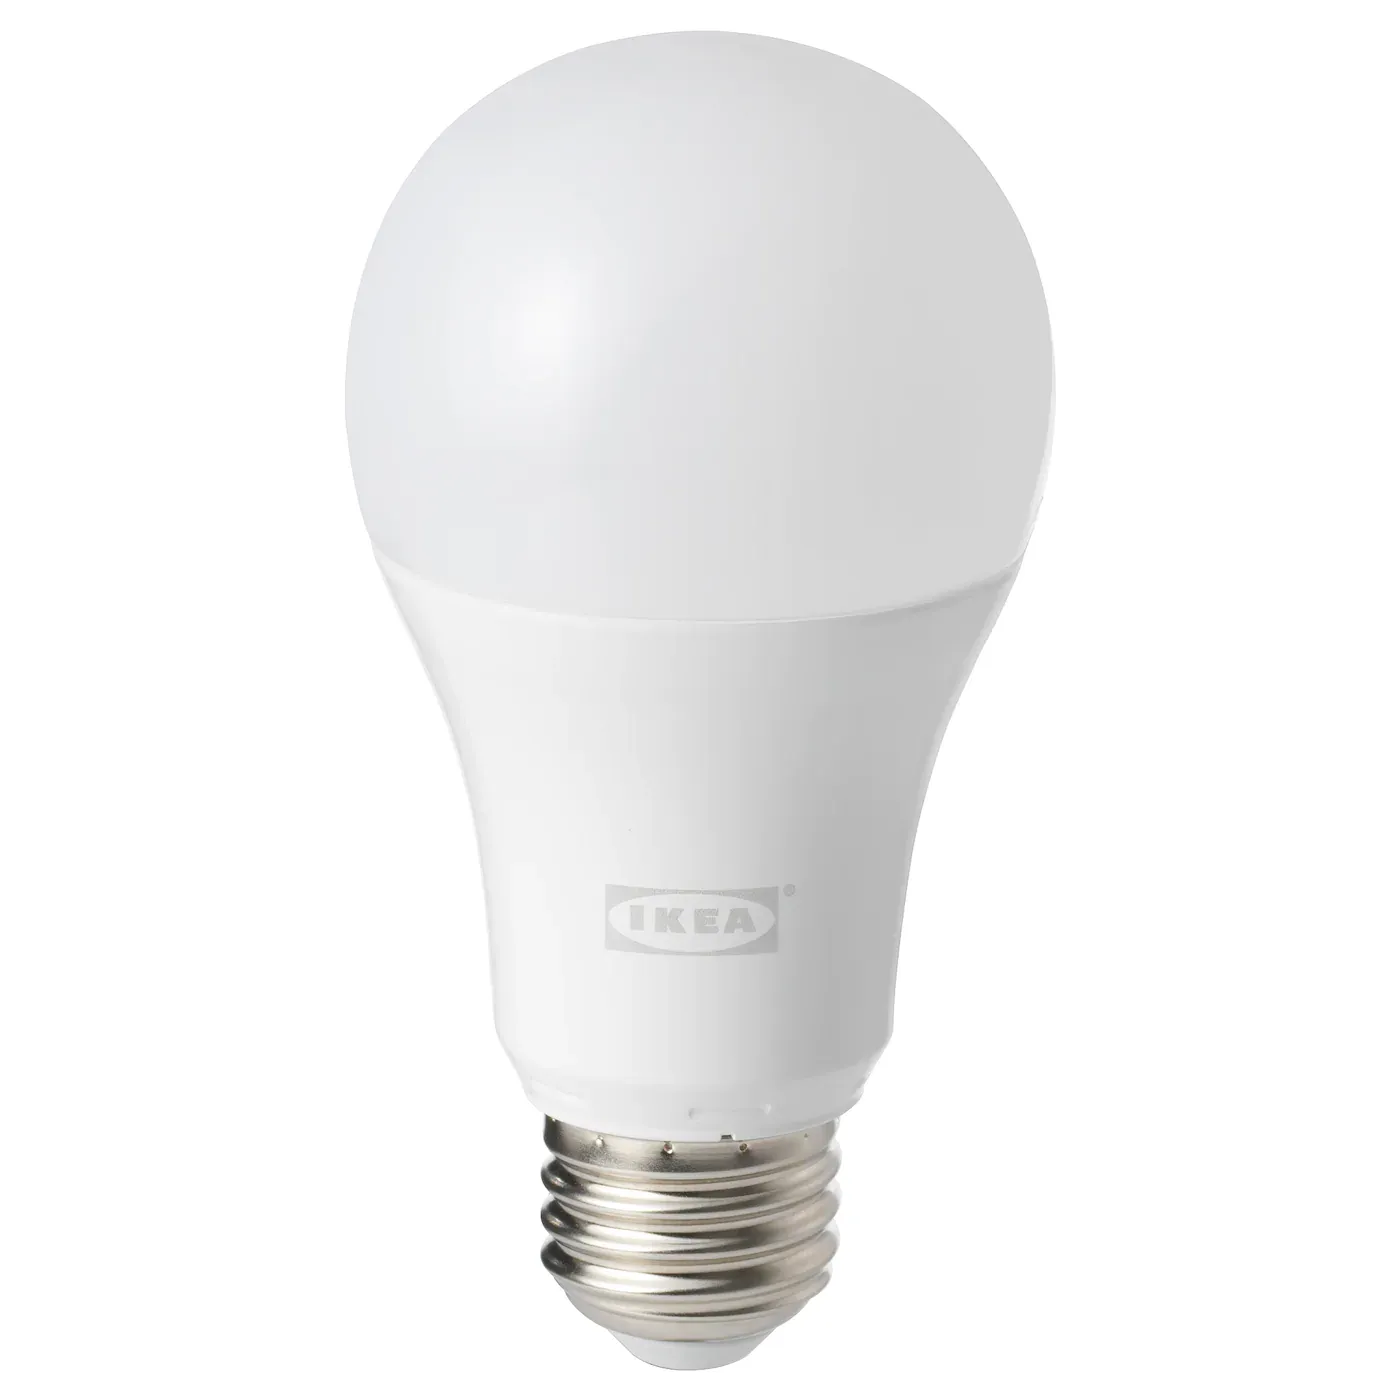 Tradfri LED bulb E26 1000 lumen, dimmable white spectrum opal